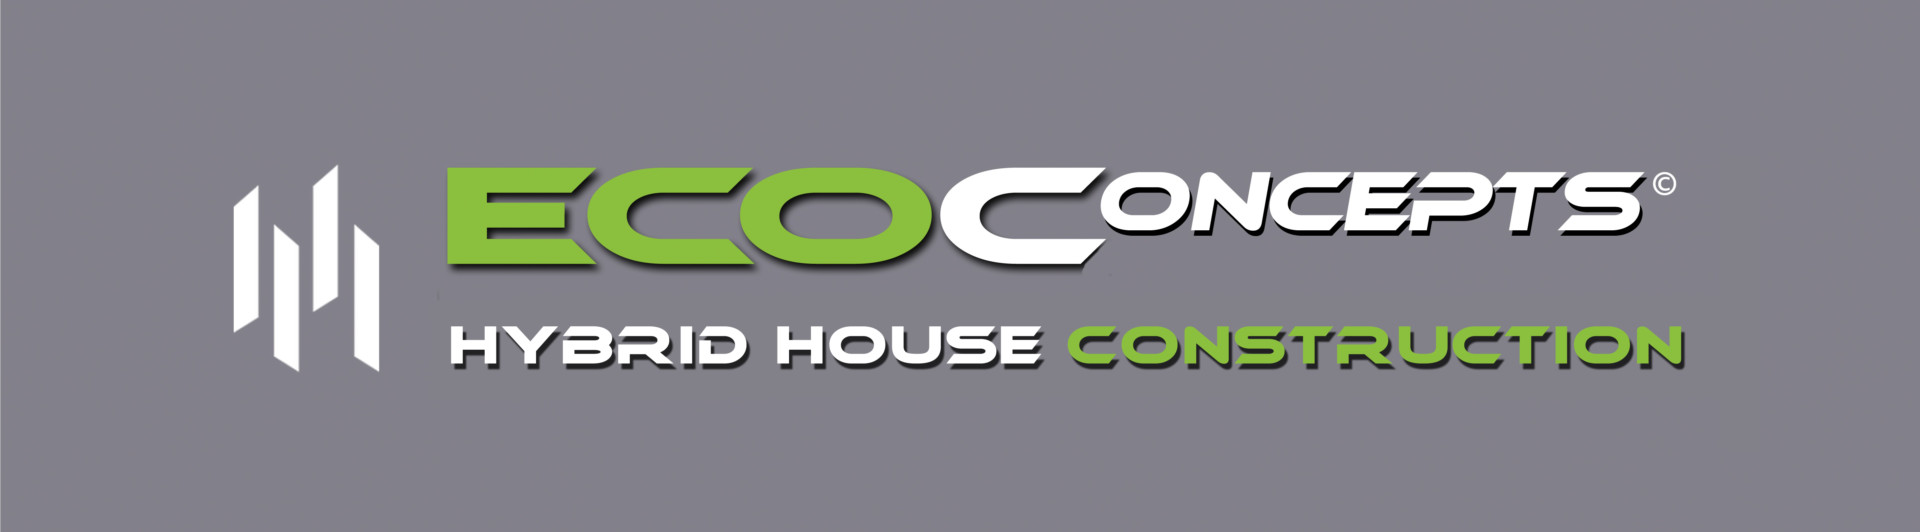 Logo-Hybrid-EcoConcepts-copy